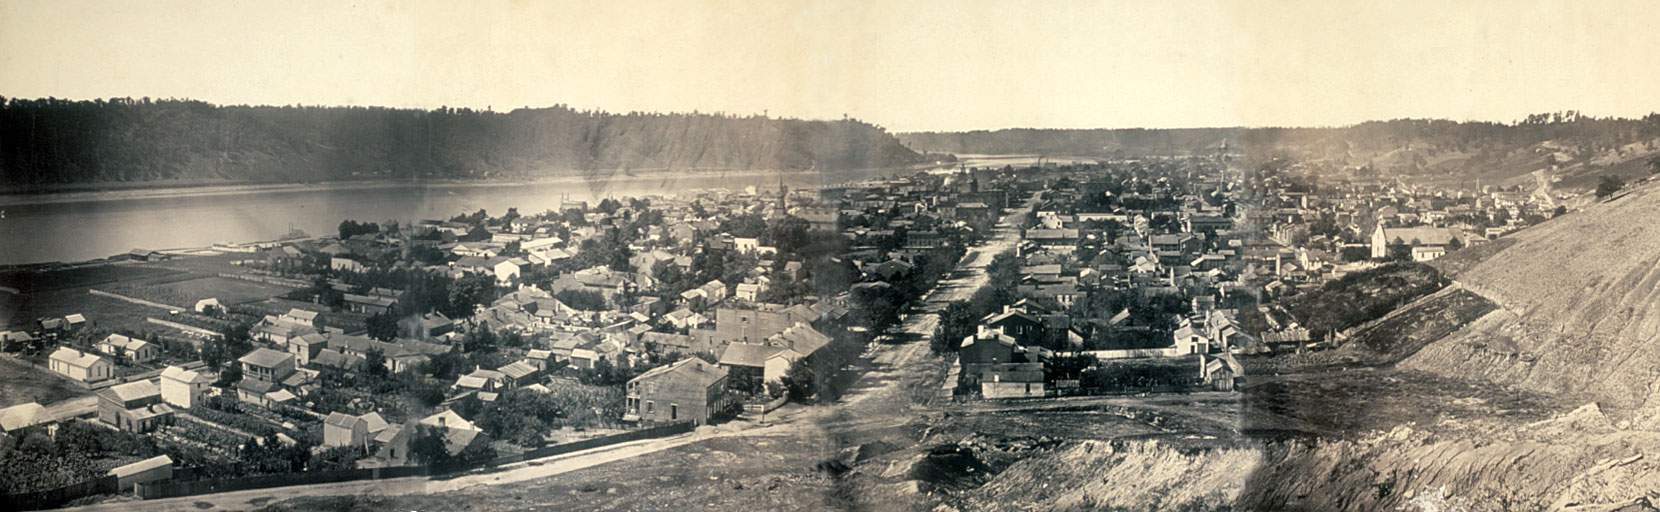 Madison, Indiana, circa 1866, panoramic photograph, zoomable image